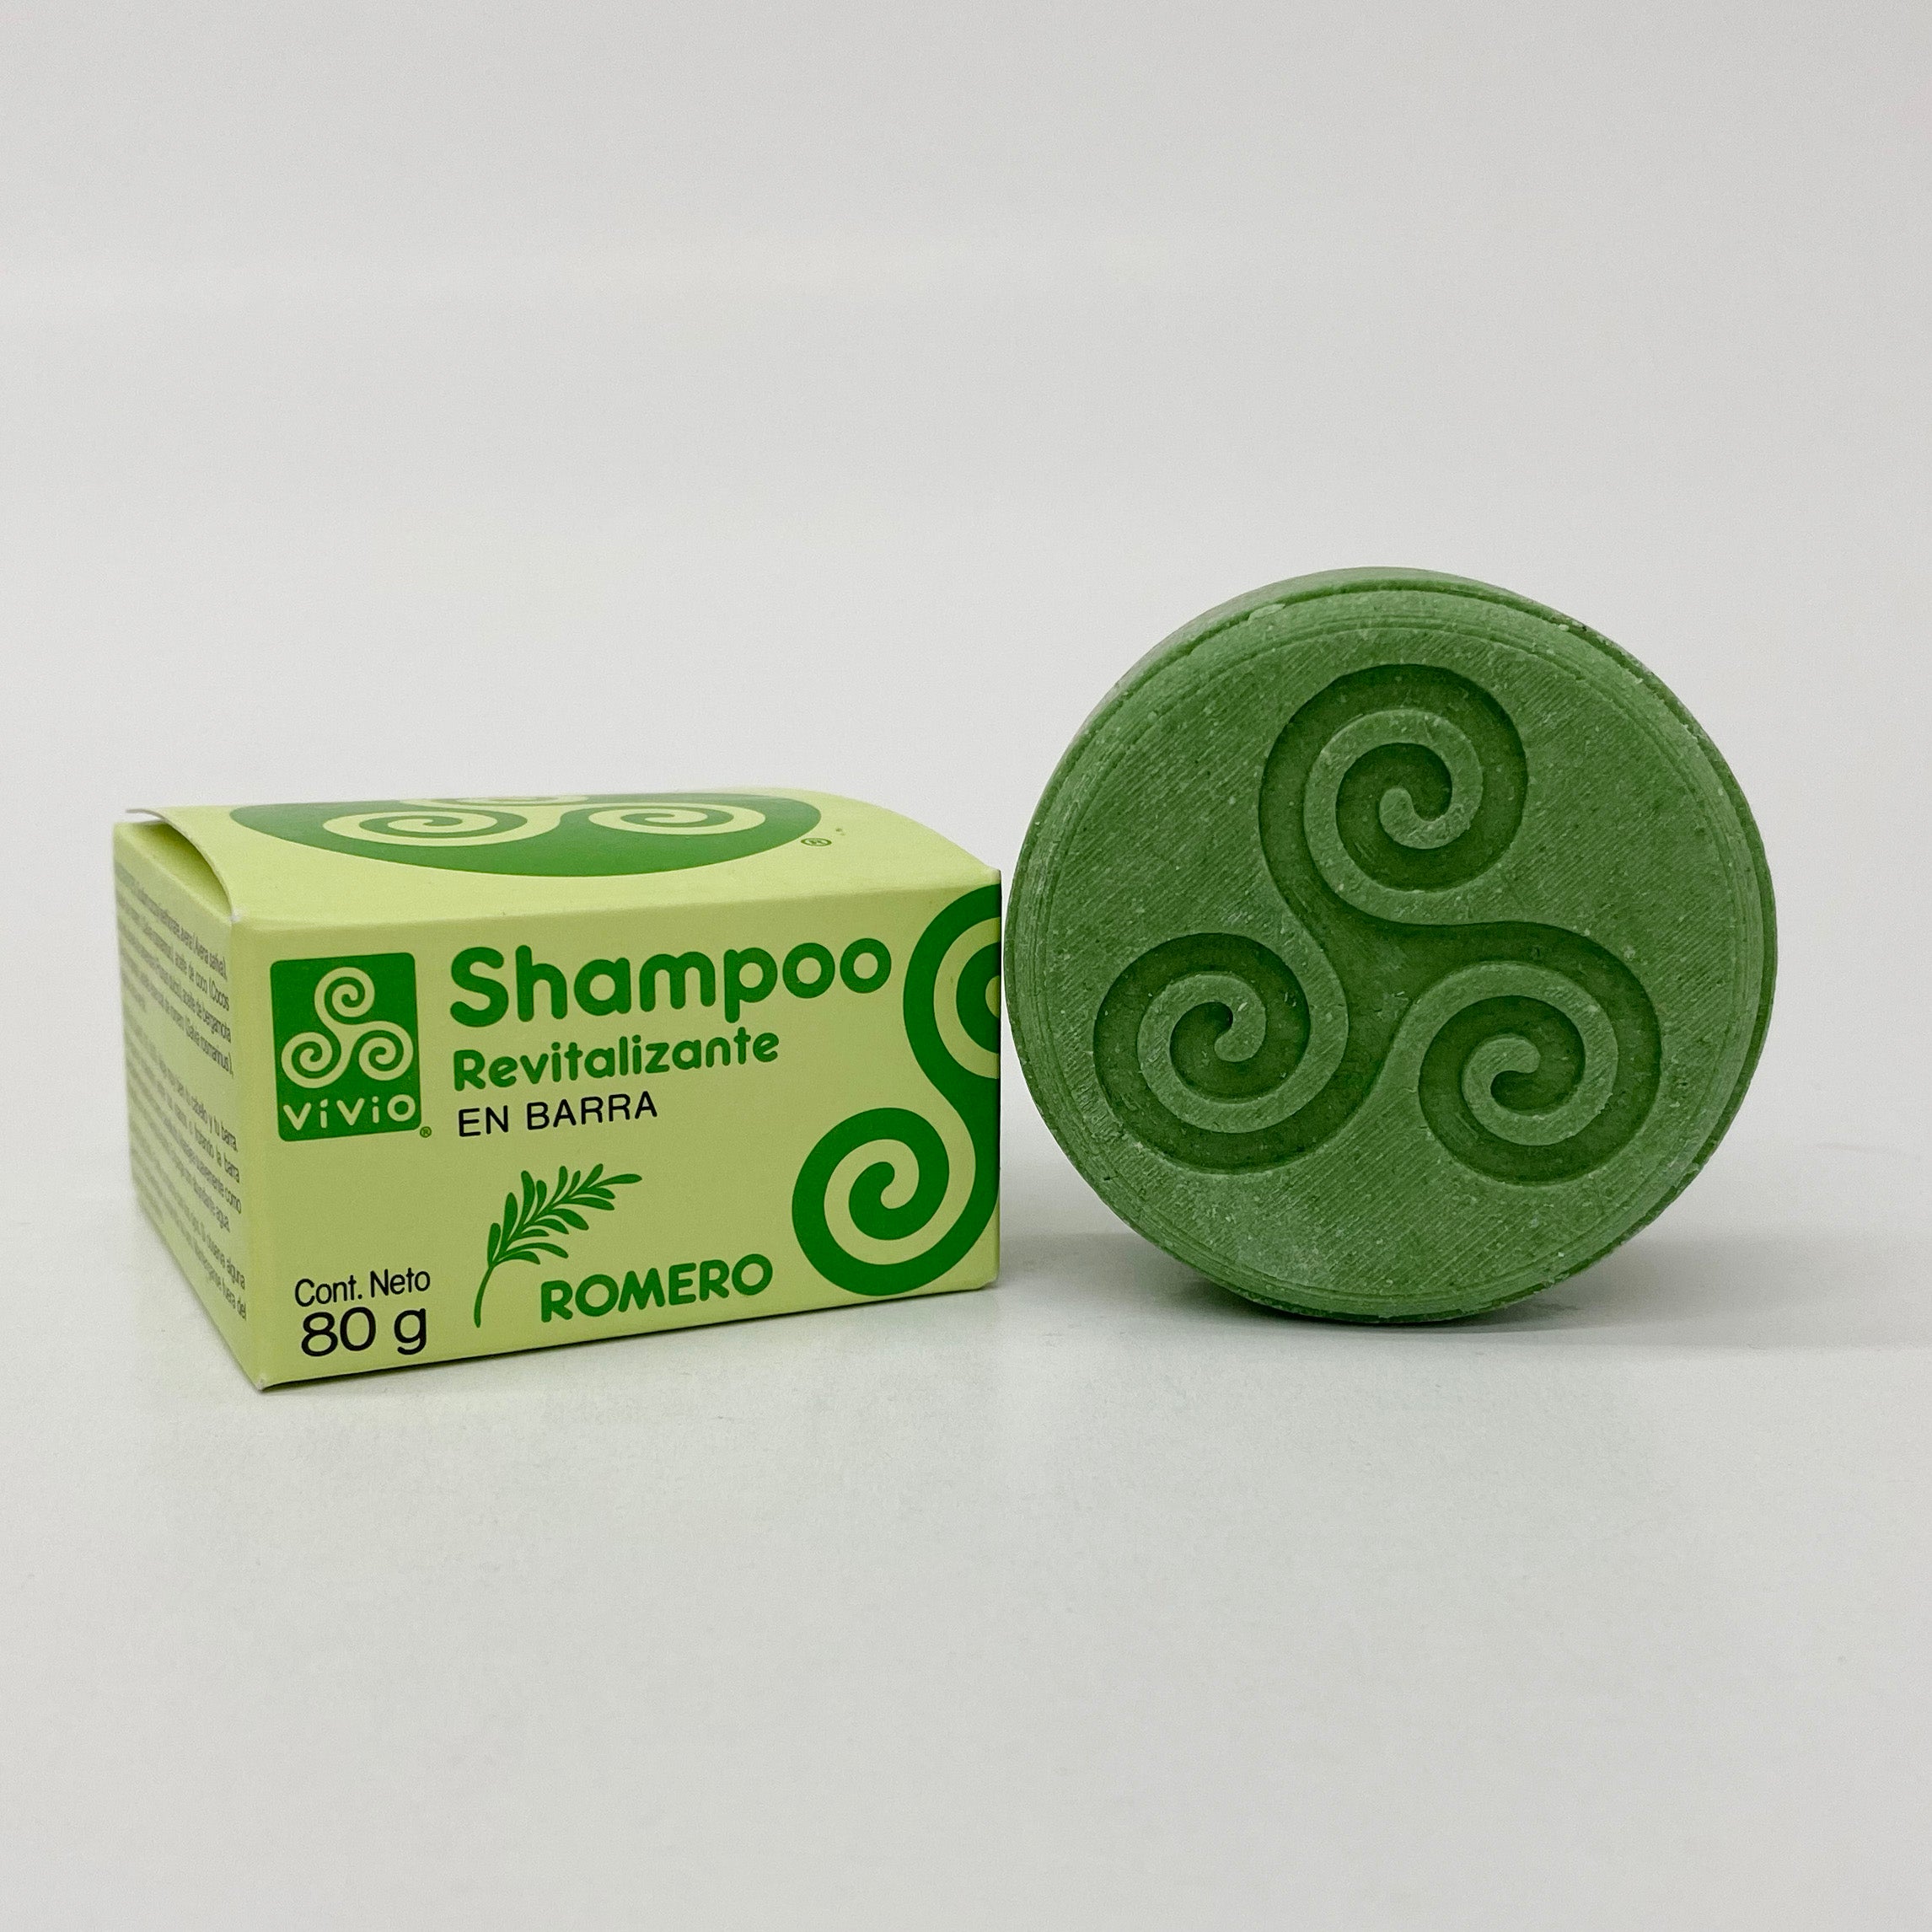 Shampoo rehidratante y revitalizante Vívio Foods